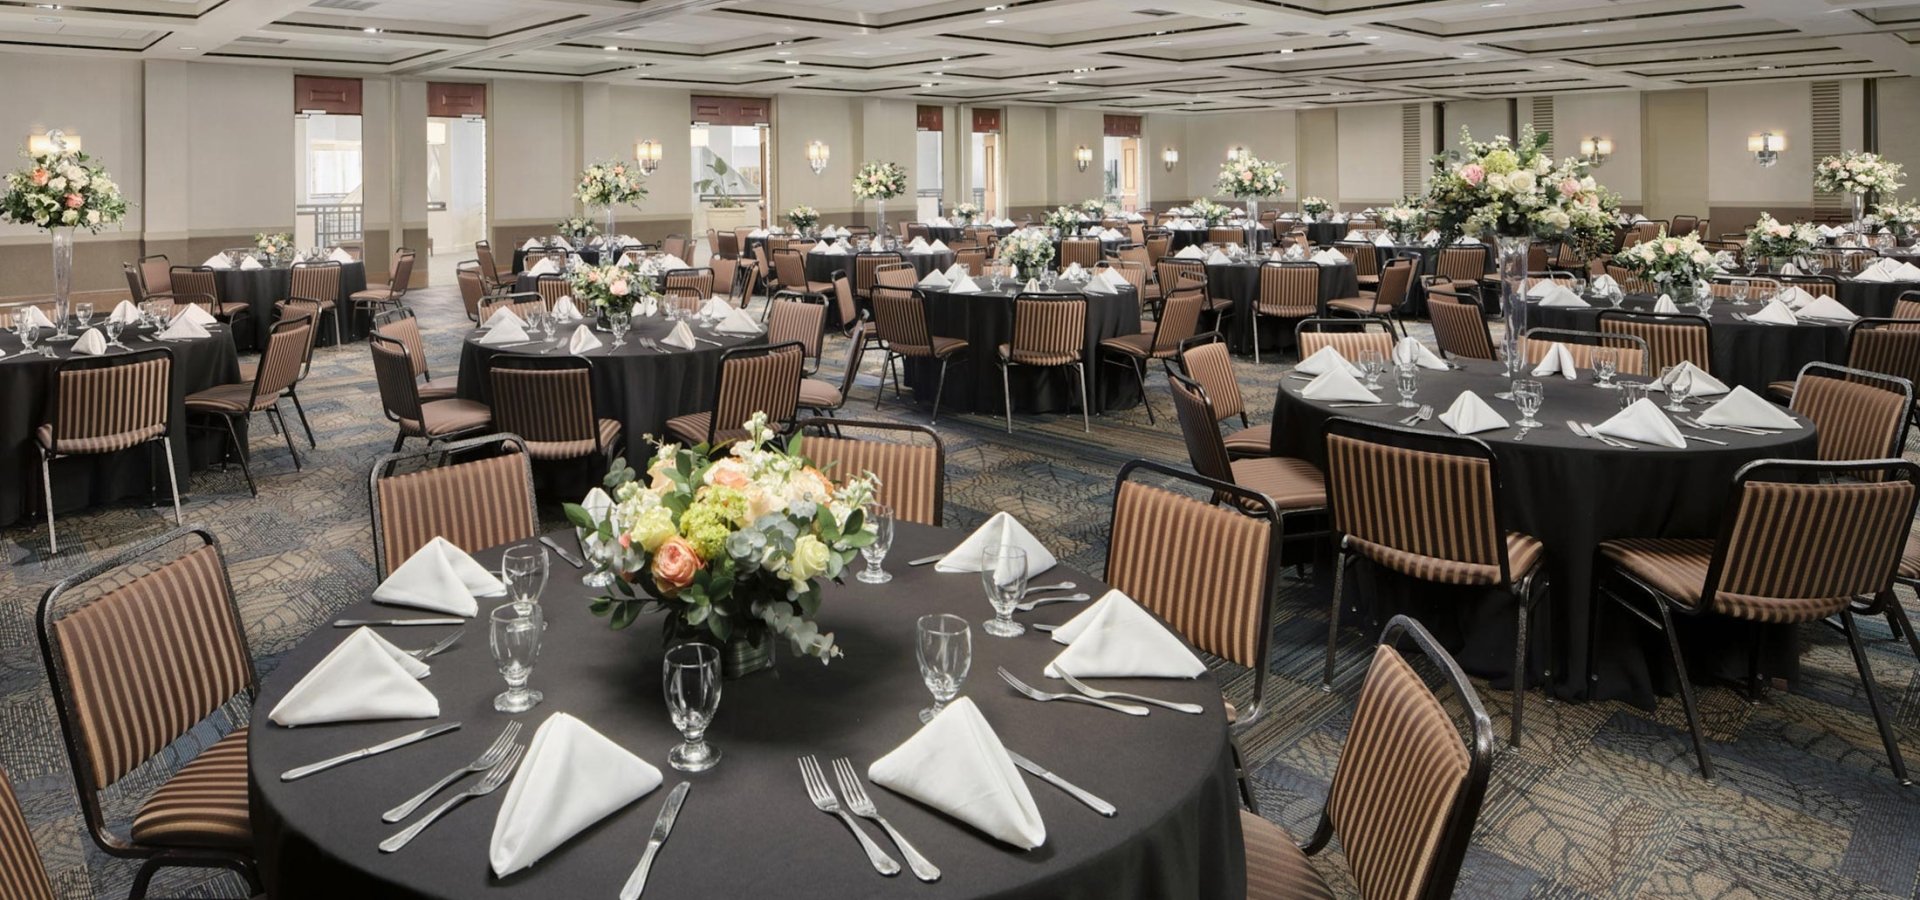 The Hilton Ballroom Event & Reception Venue at Myrtle Beach